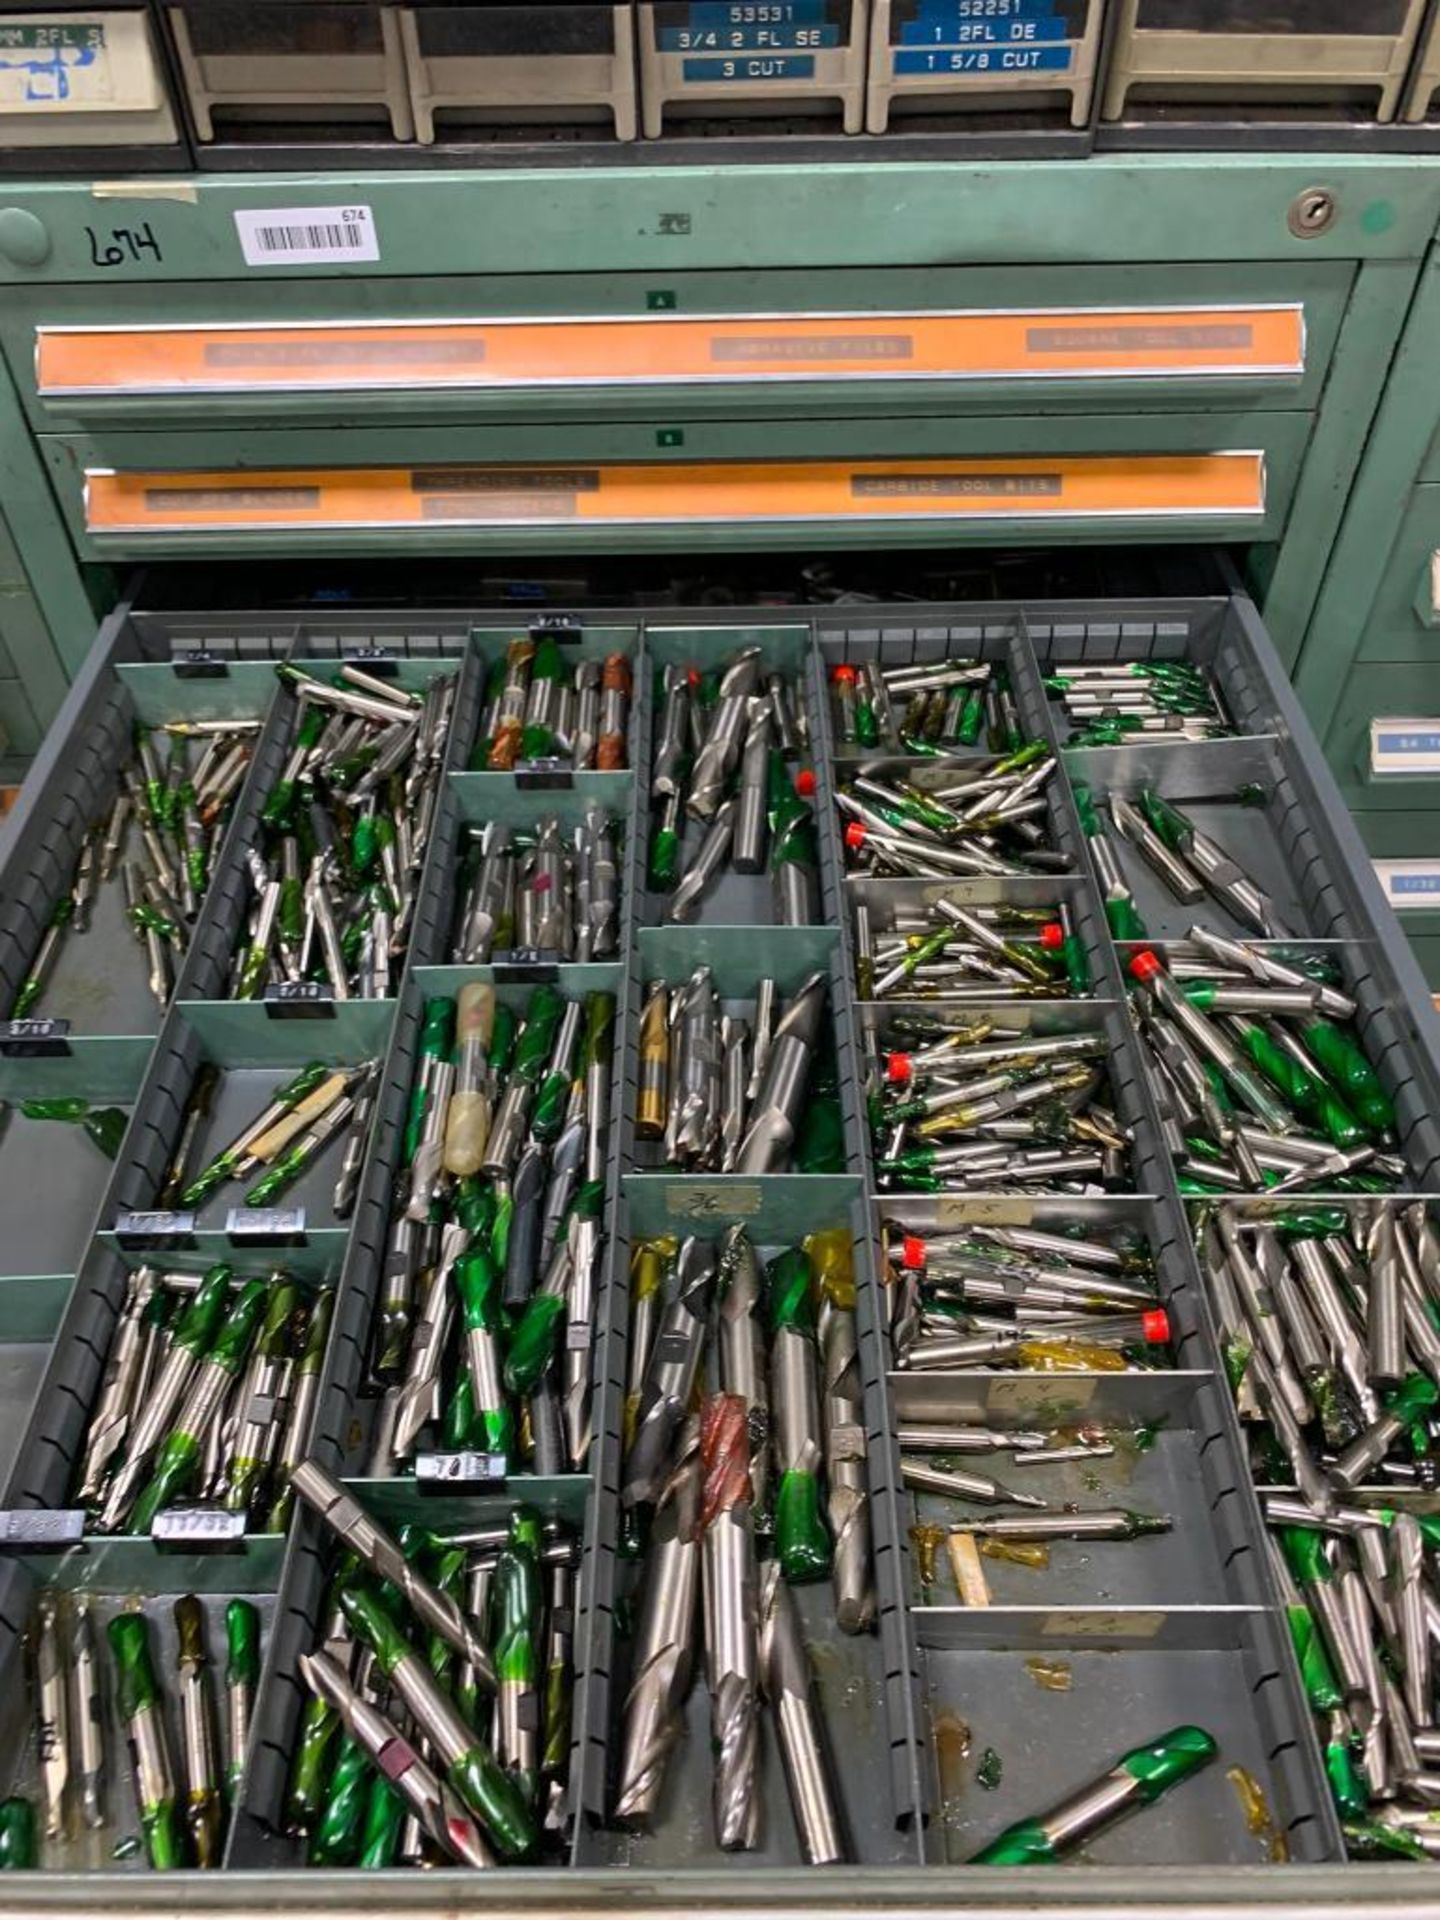 Vidmar 12-Drawer Cabinet w/ Tool Holders, Endmills, Dies, Allen Wrenches, Die Handles, Bronze, Files - Image 4 of 12